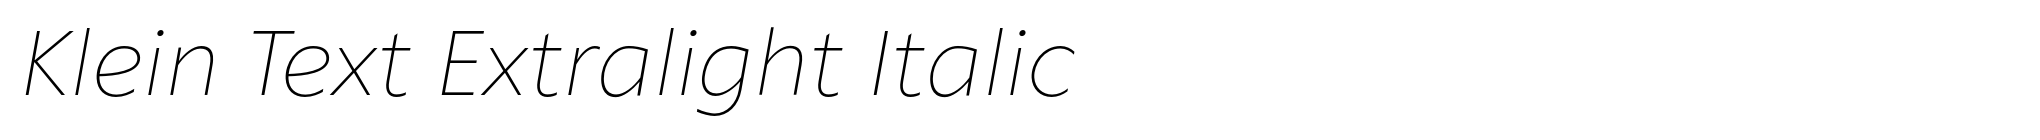 Klein Text Extralight Italic image